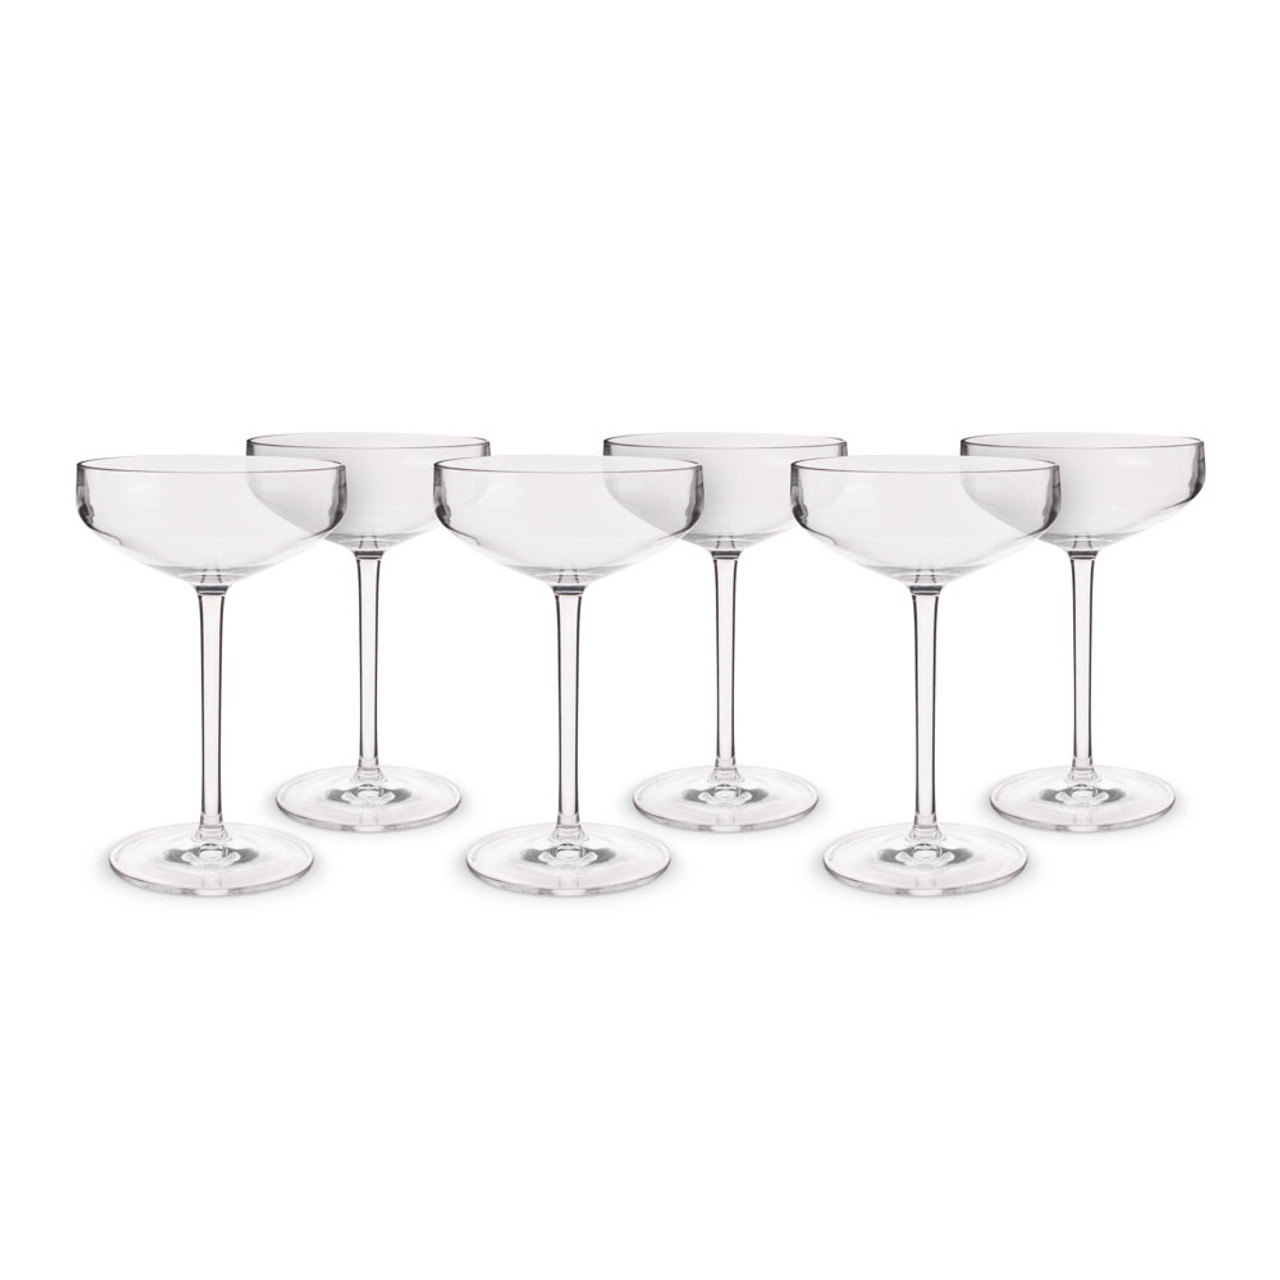 Reusable Plastic Wine Glasses (Set of 4) - Clear Plastic Wine Glasses with  Stem (12 oz), Tritan Non Disposable Wine Glasses, BPA-Free, Unbreakable  Plastic Glasses for Party, Outdoor Plastic Wine Glass